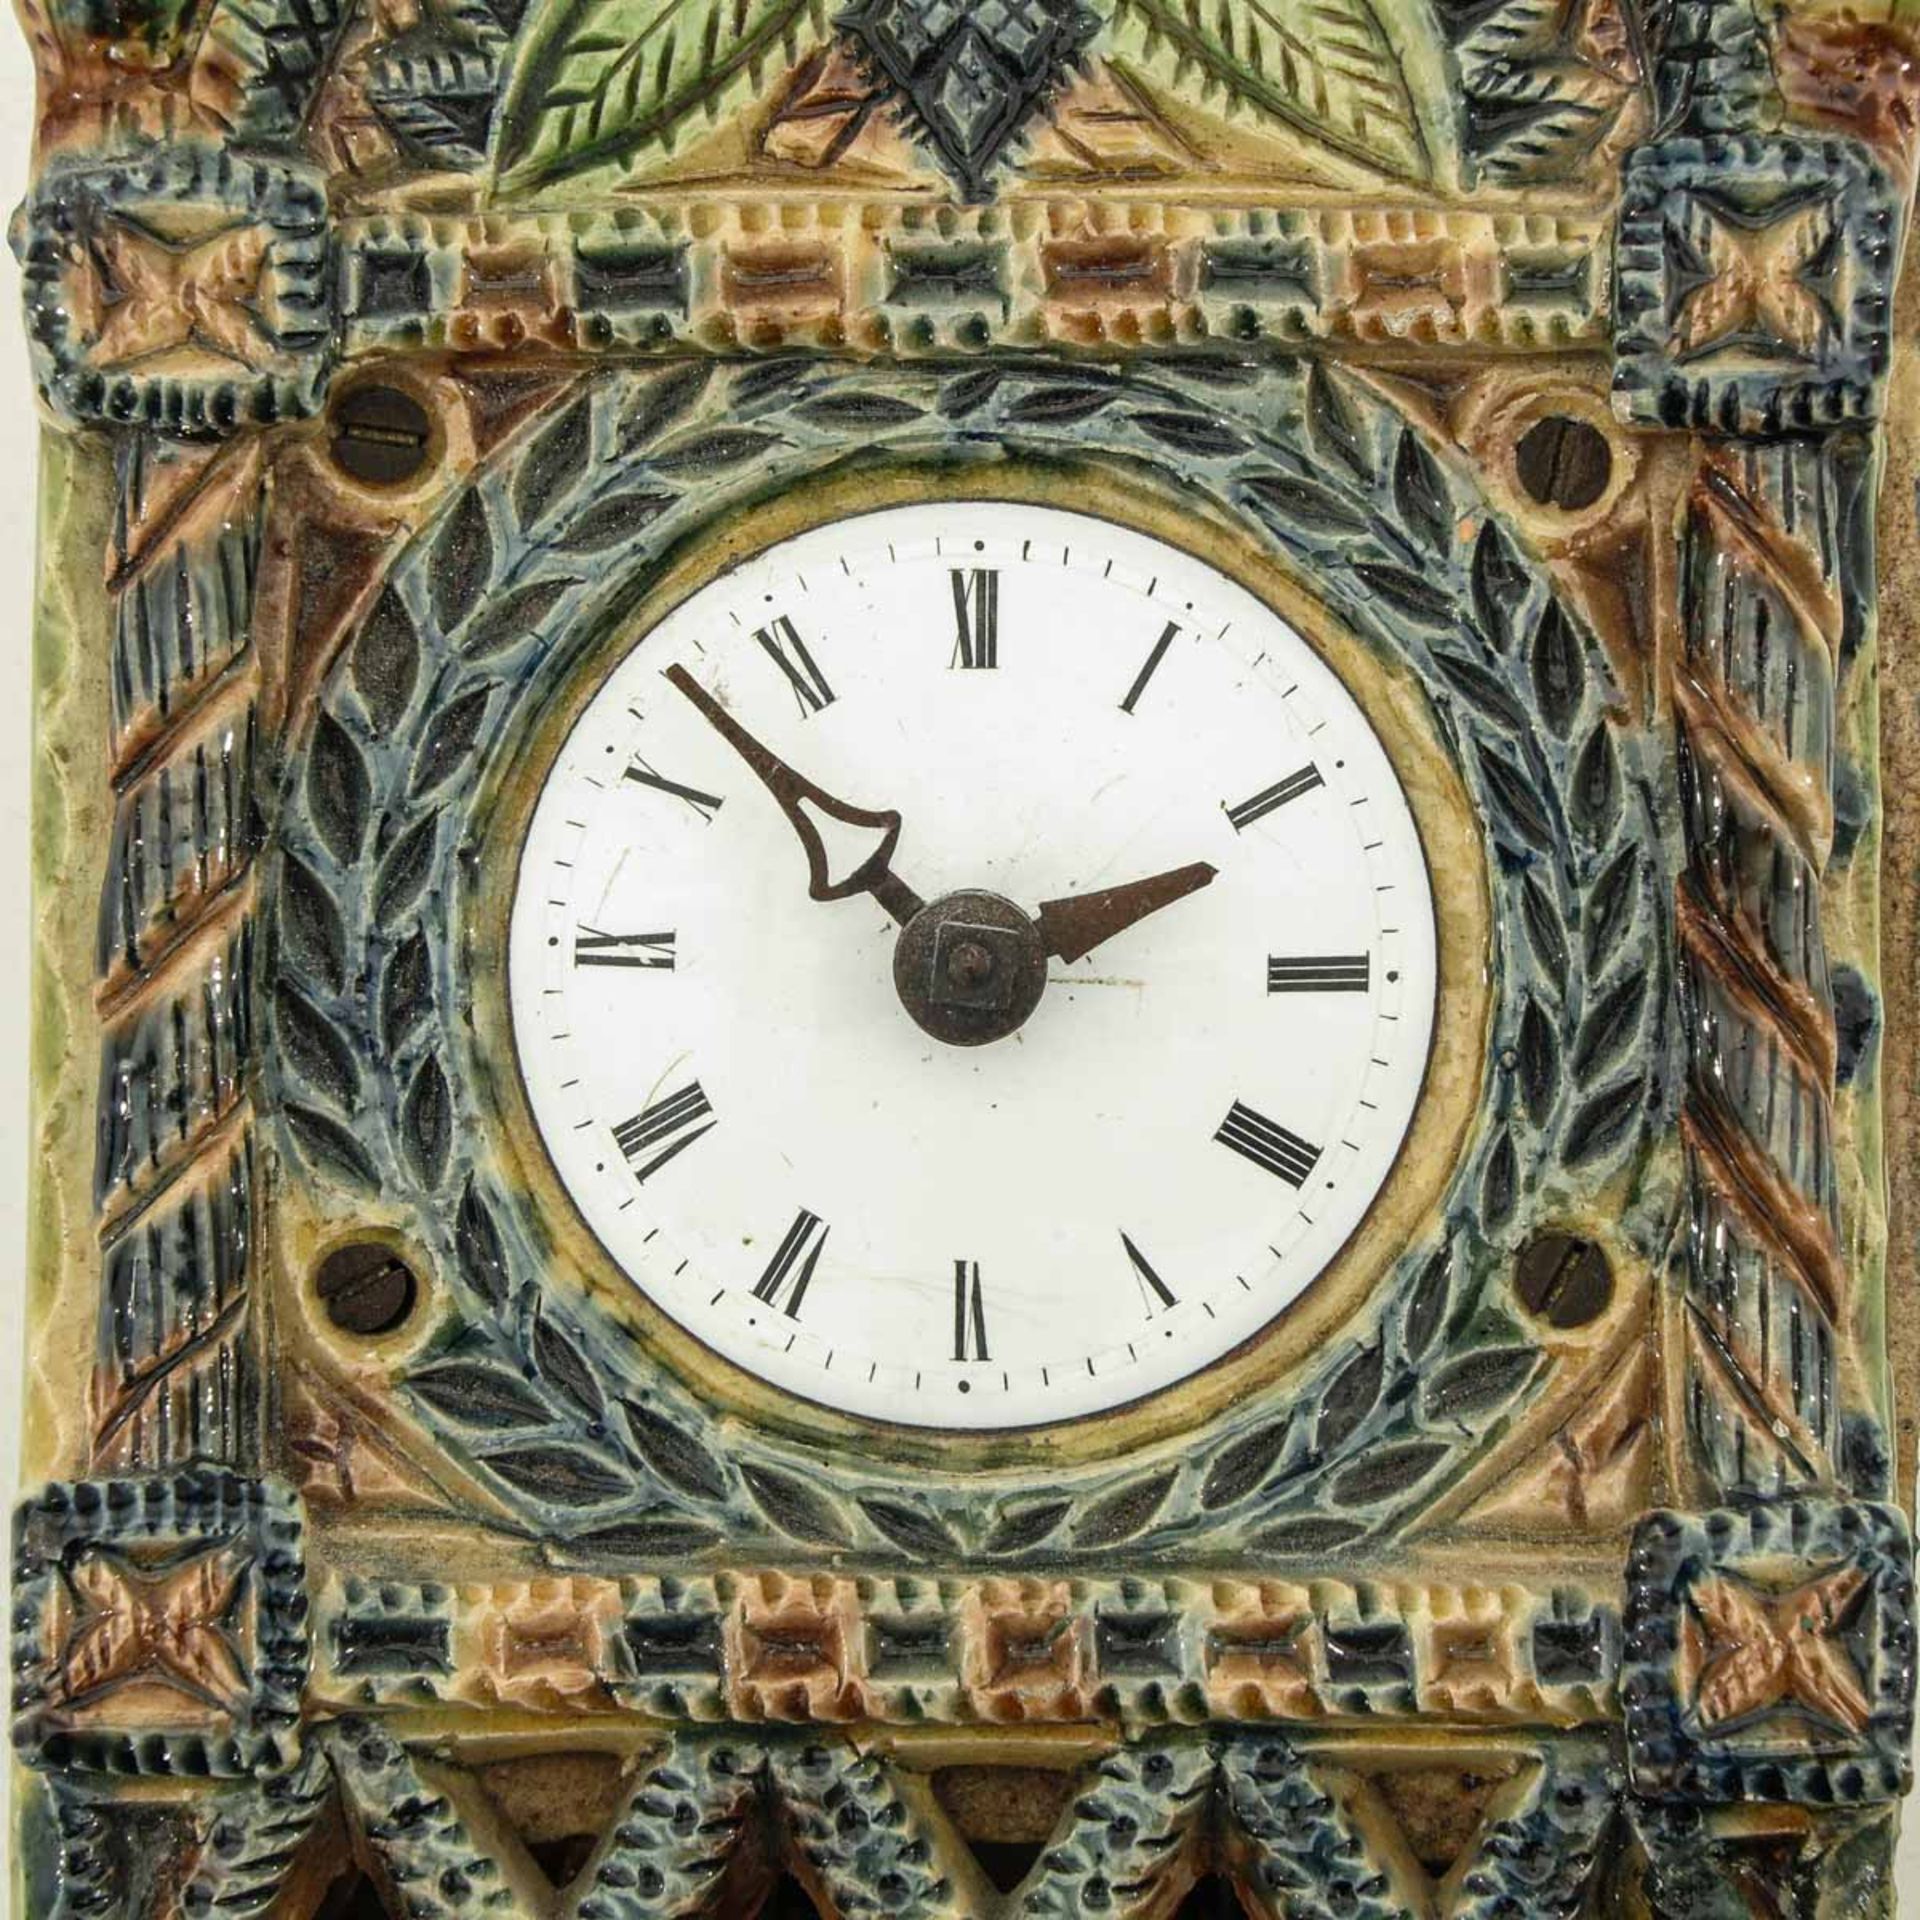 A Freerk Aukes de Boer Wall Clock - Image 7 of 9